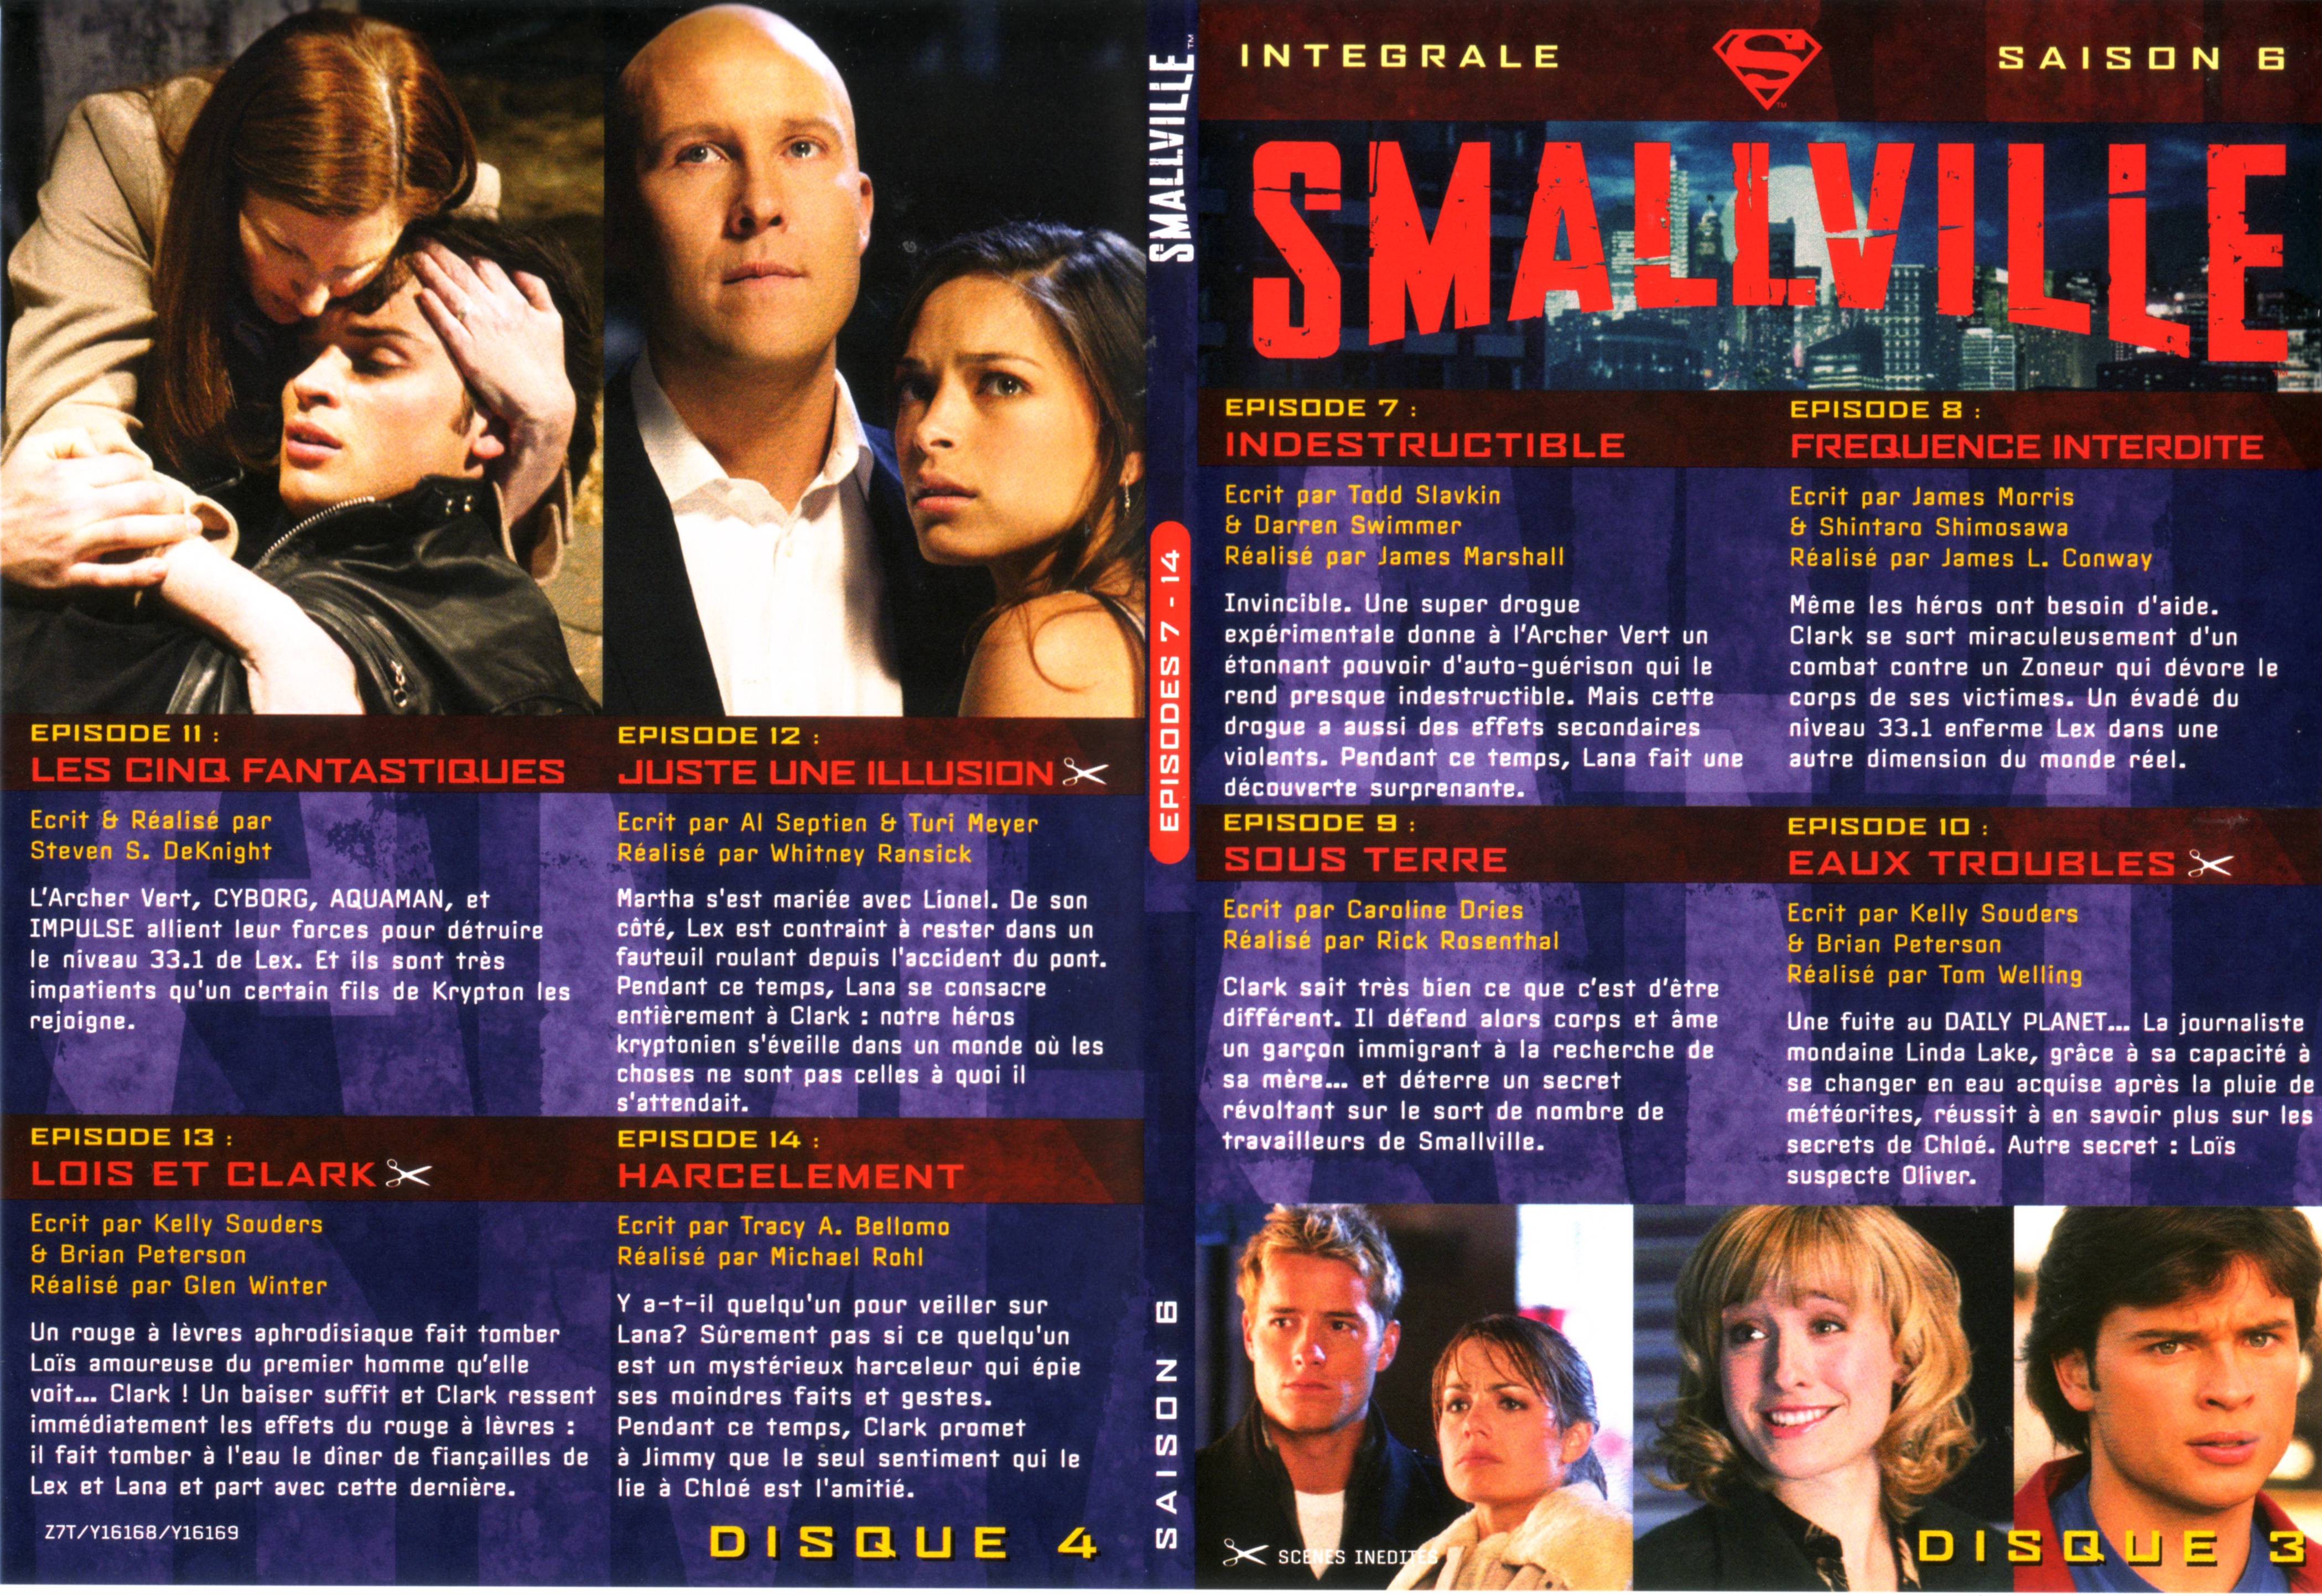 Jaquette DVD Smallville saison 6 DVD 2